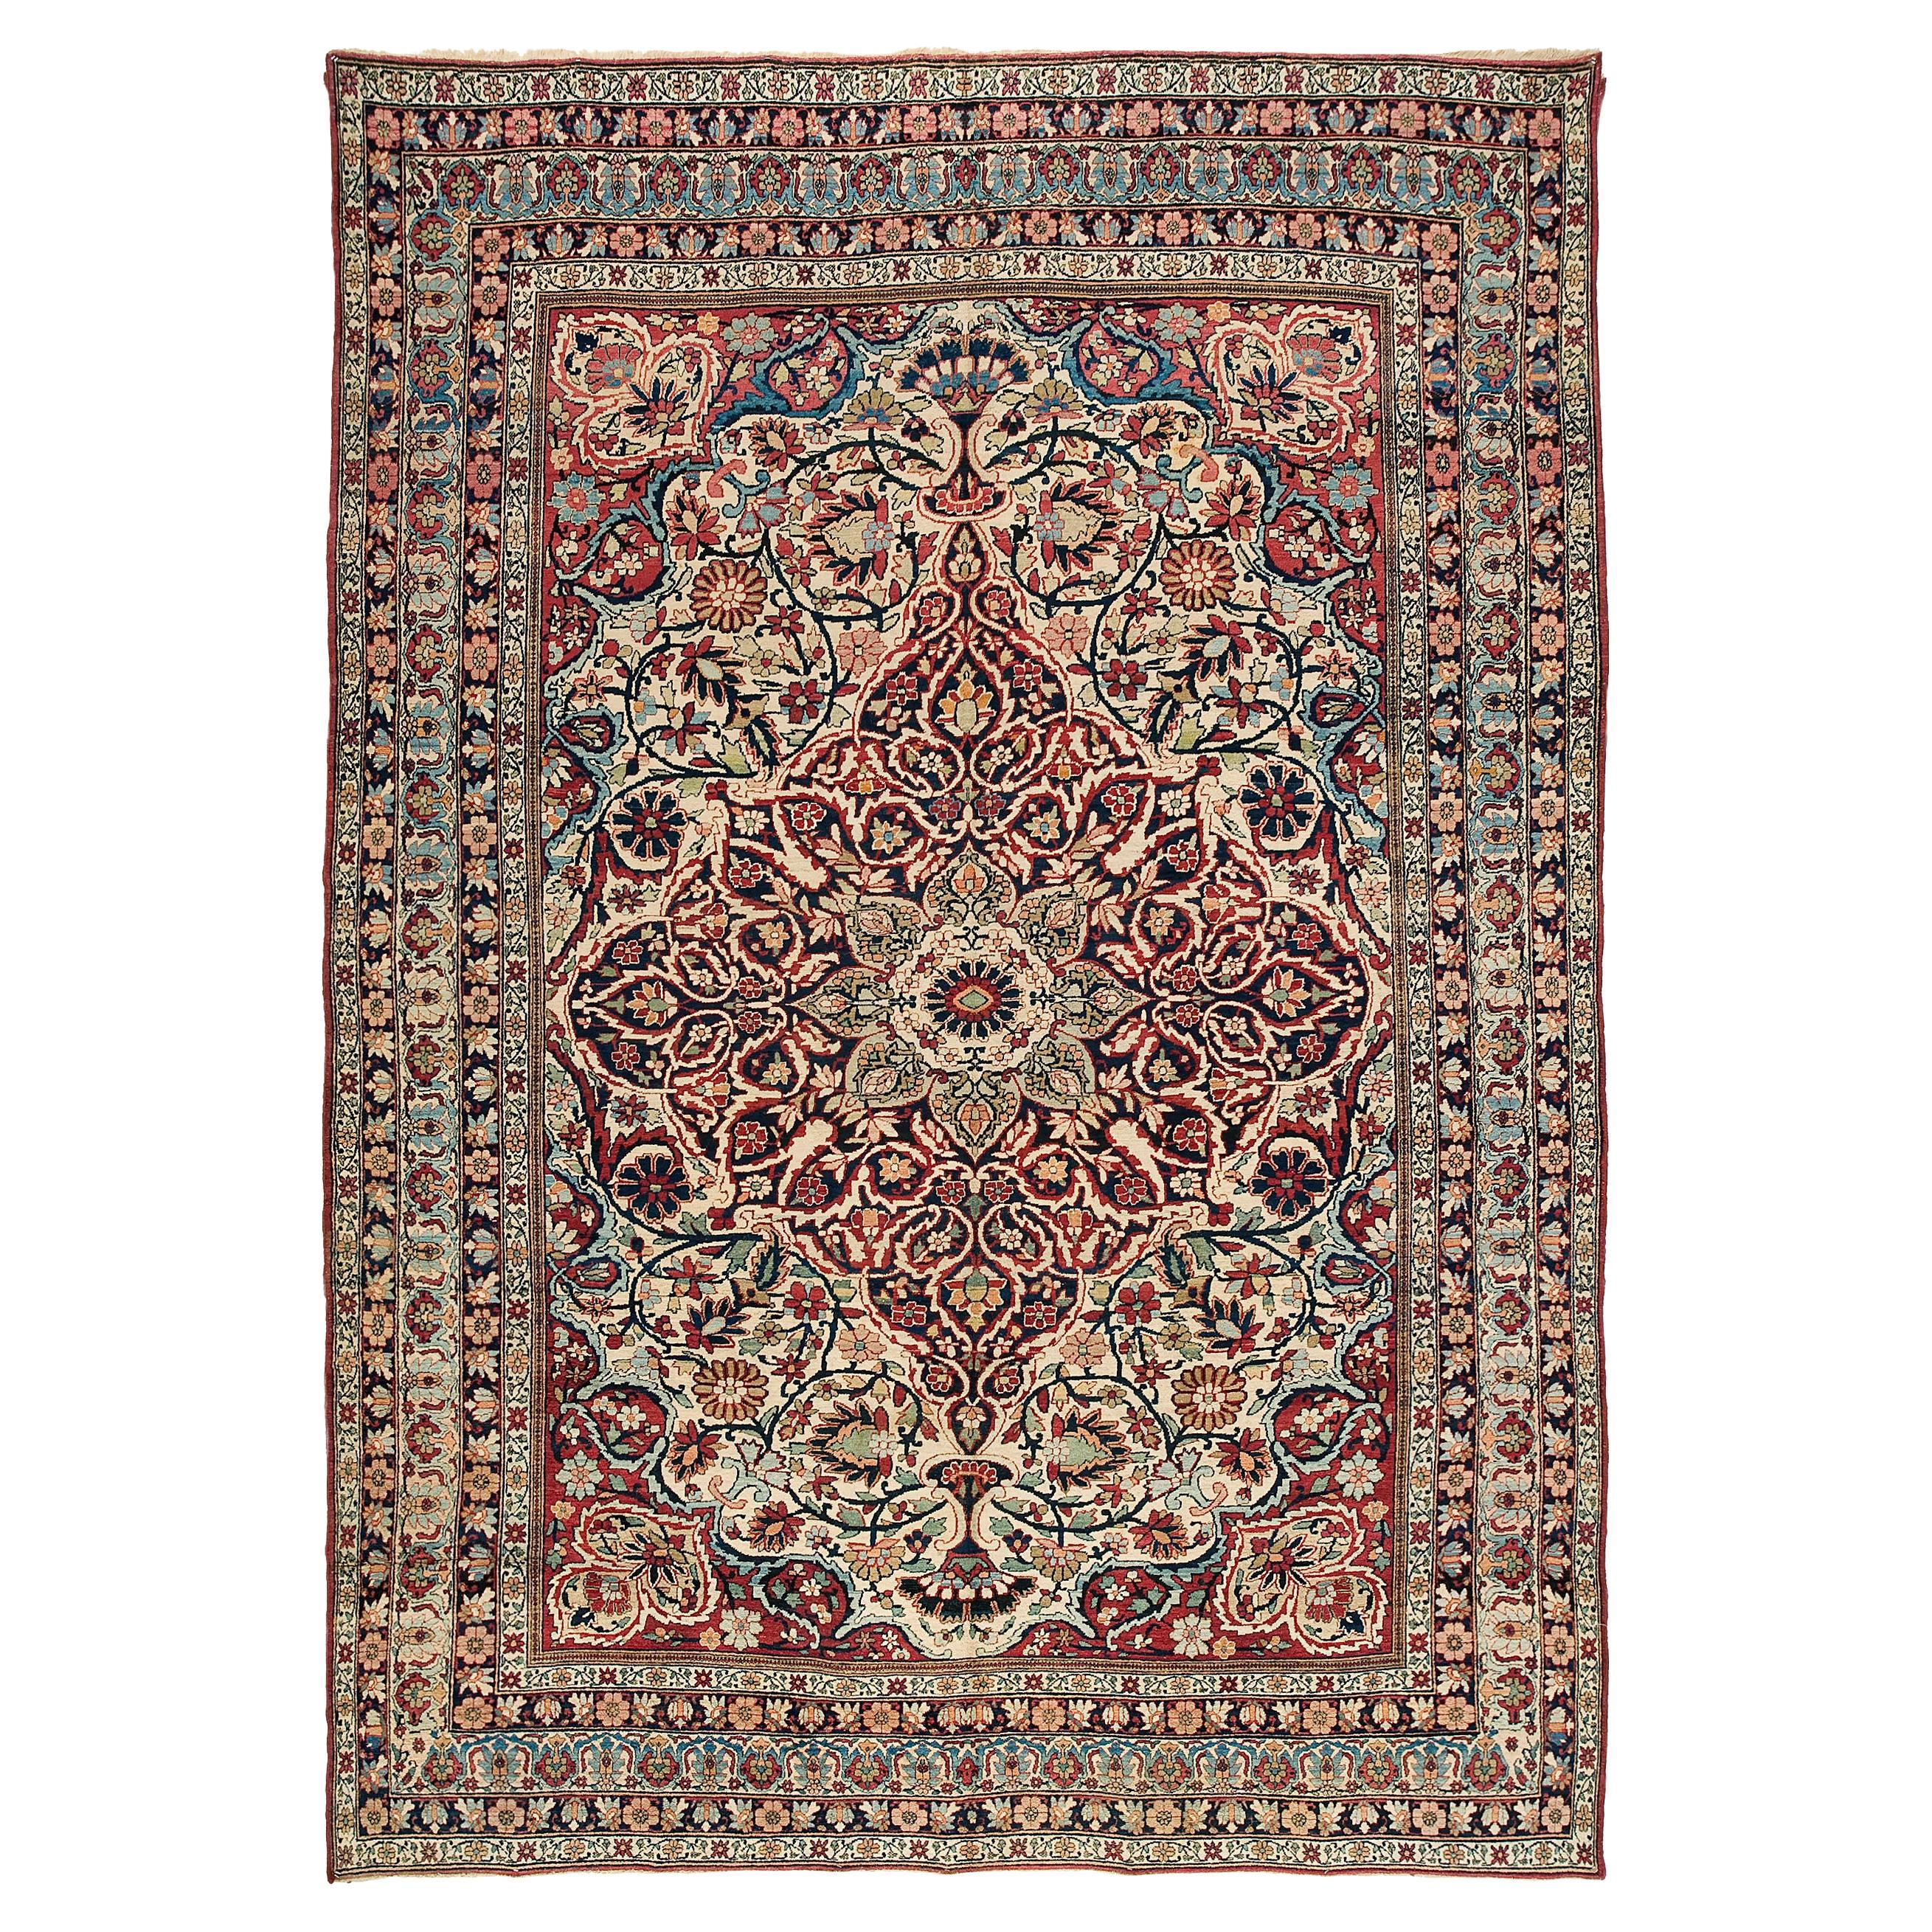 Late 19th Century Lavar Kerman Carpet